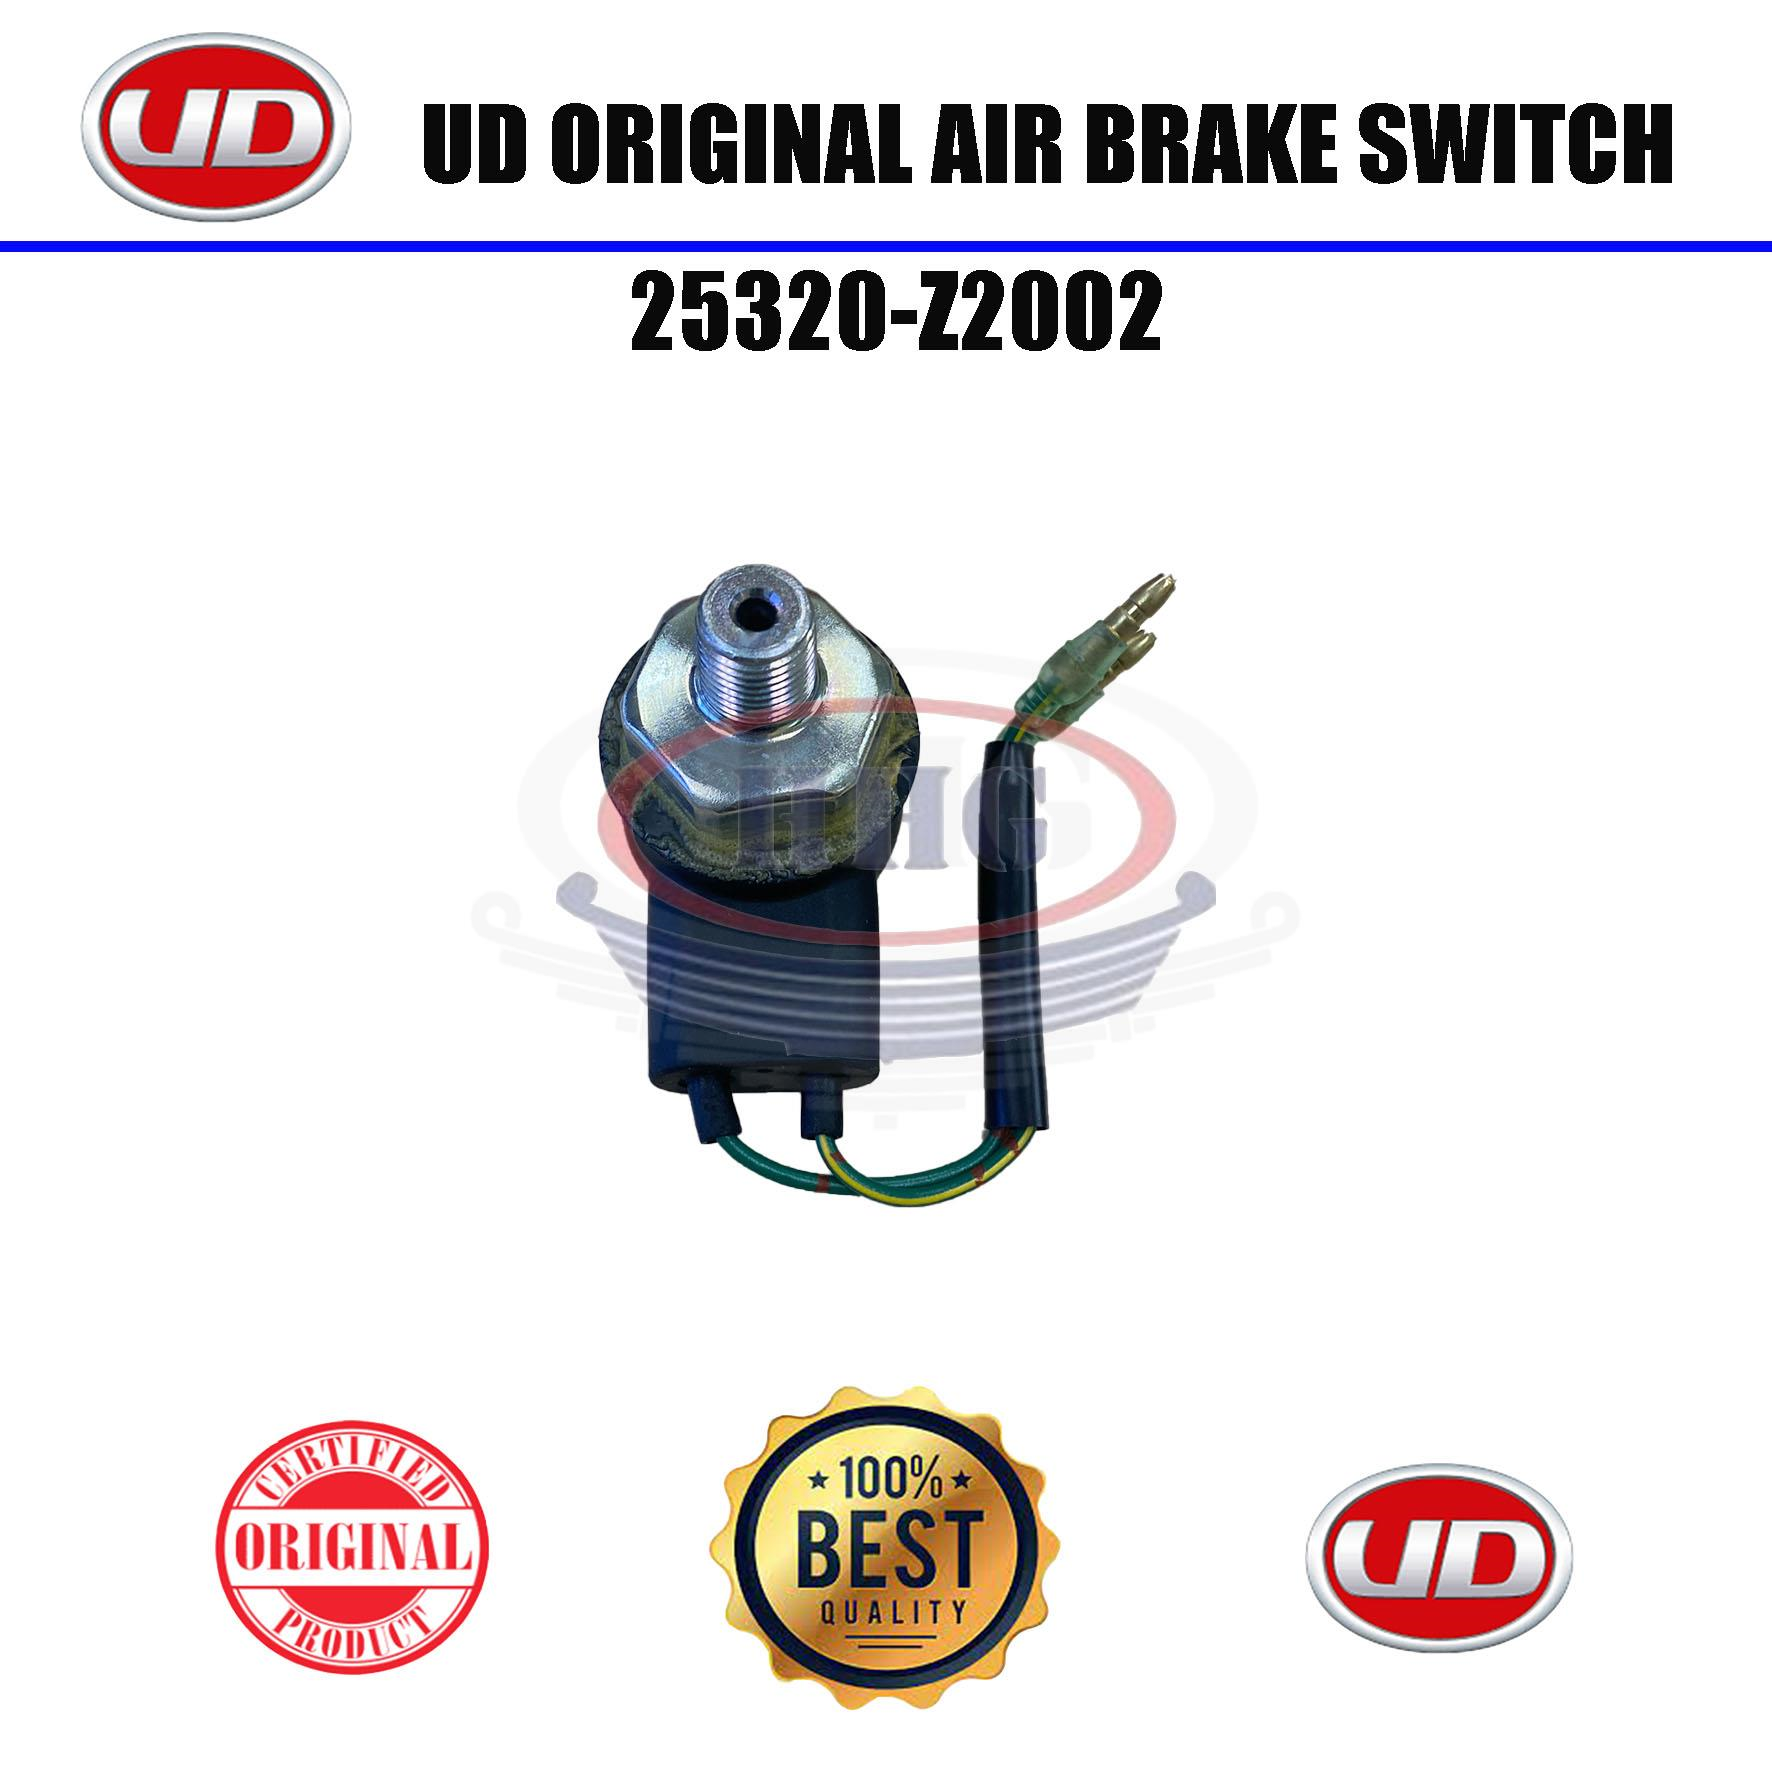 UD Original GK5 GK6 CD5 Air Brake Switch (25320-Z2002)